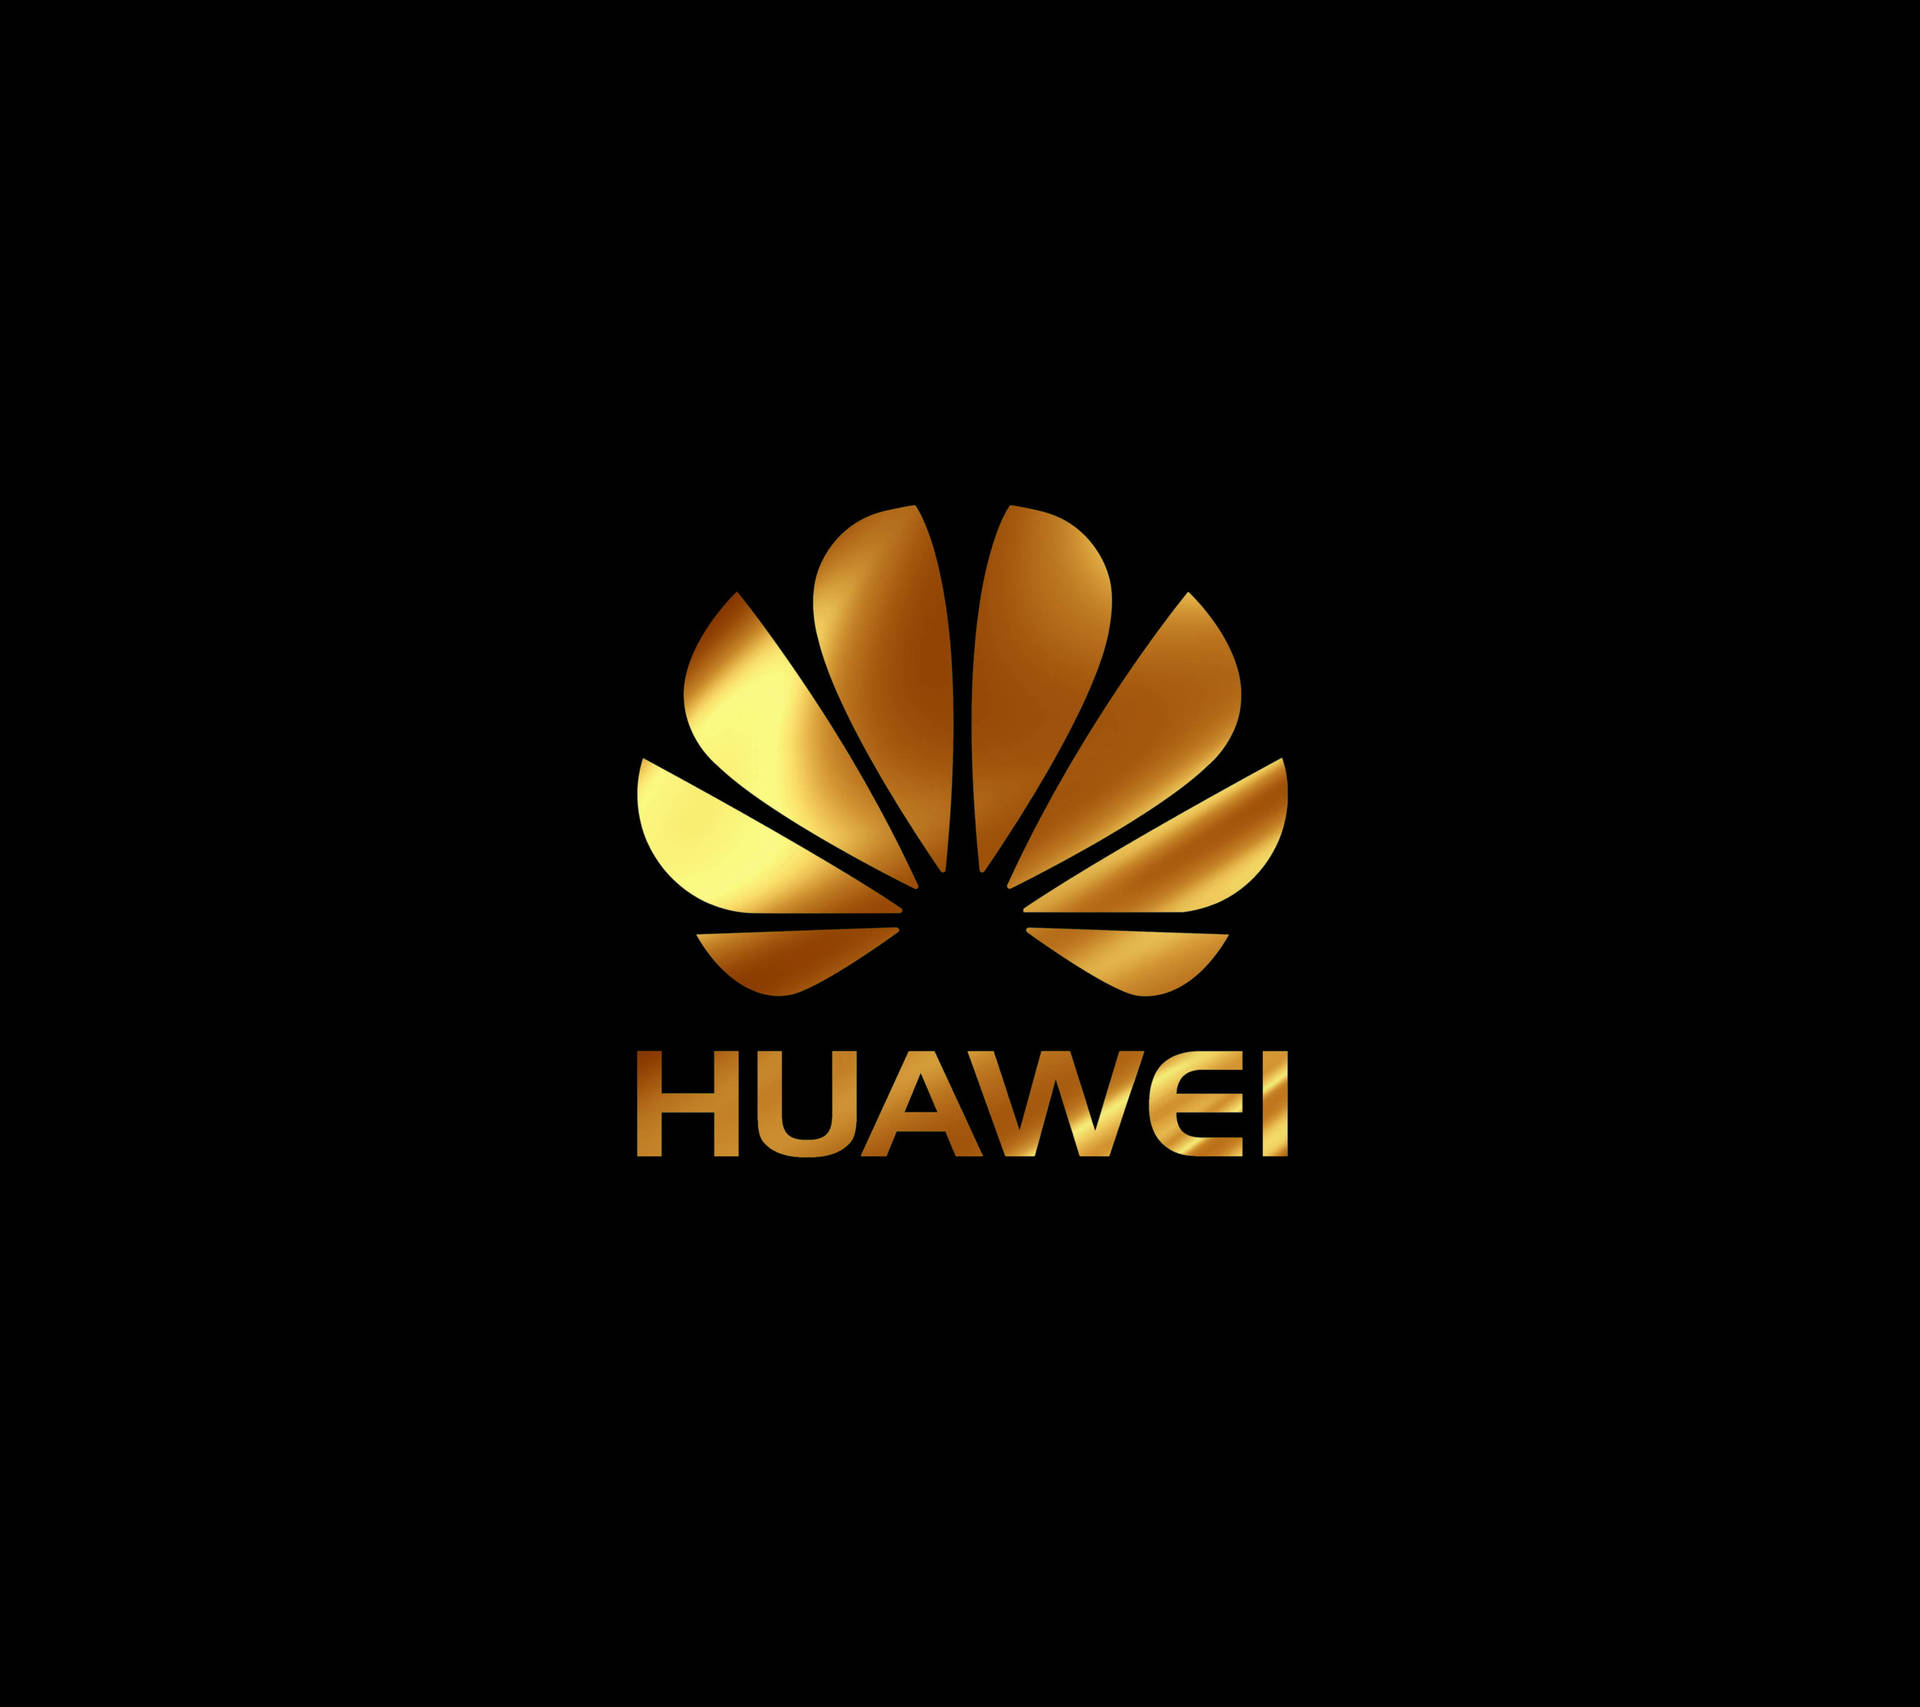 Huawei Gold Brand Logo